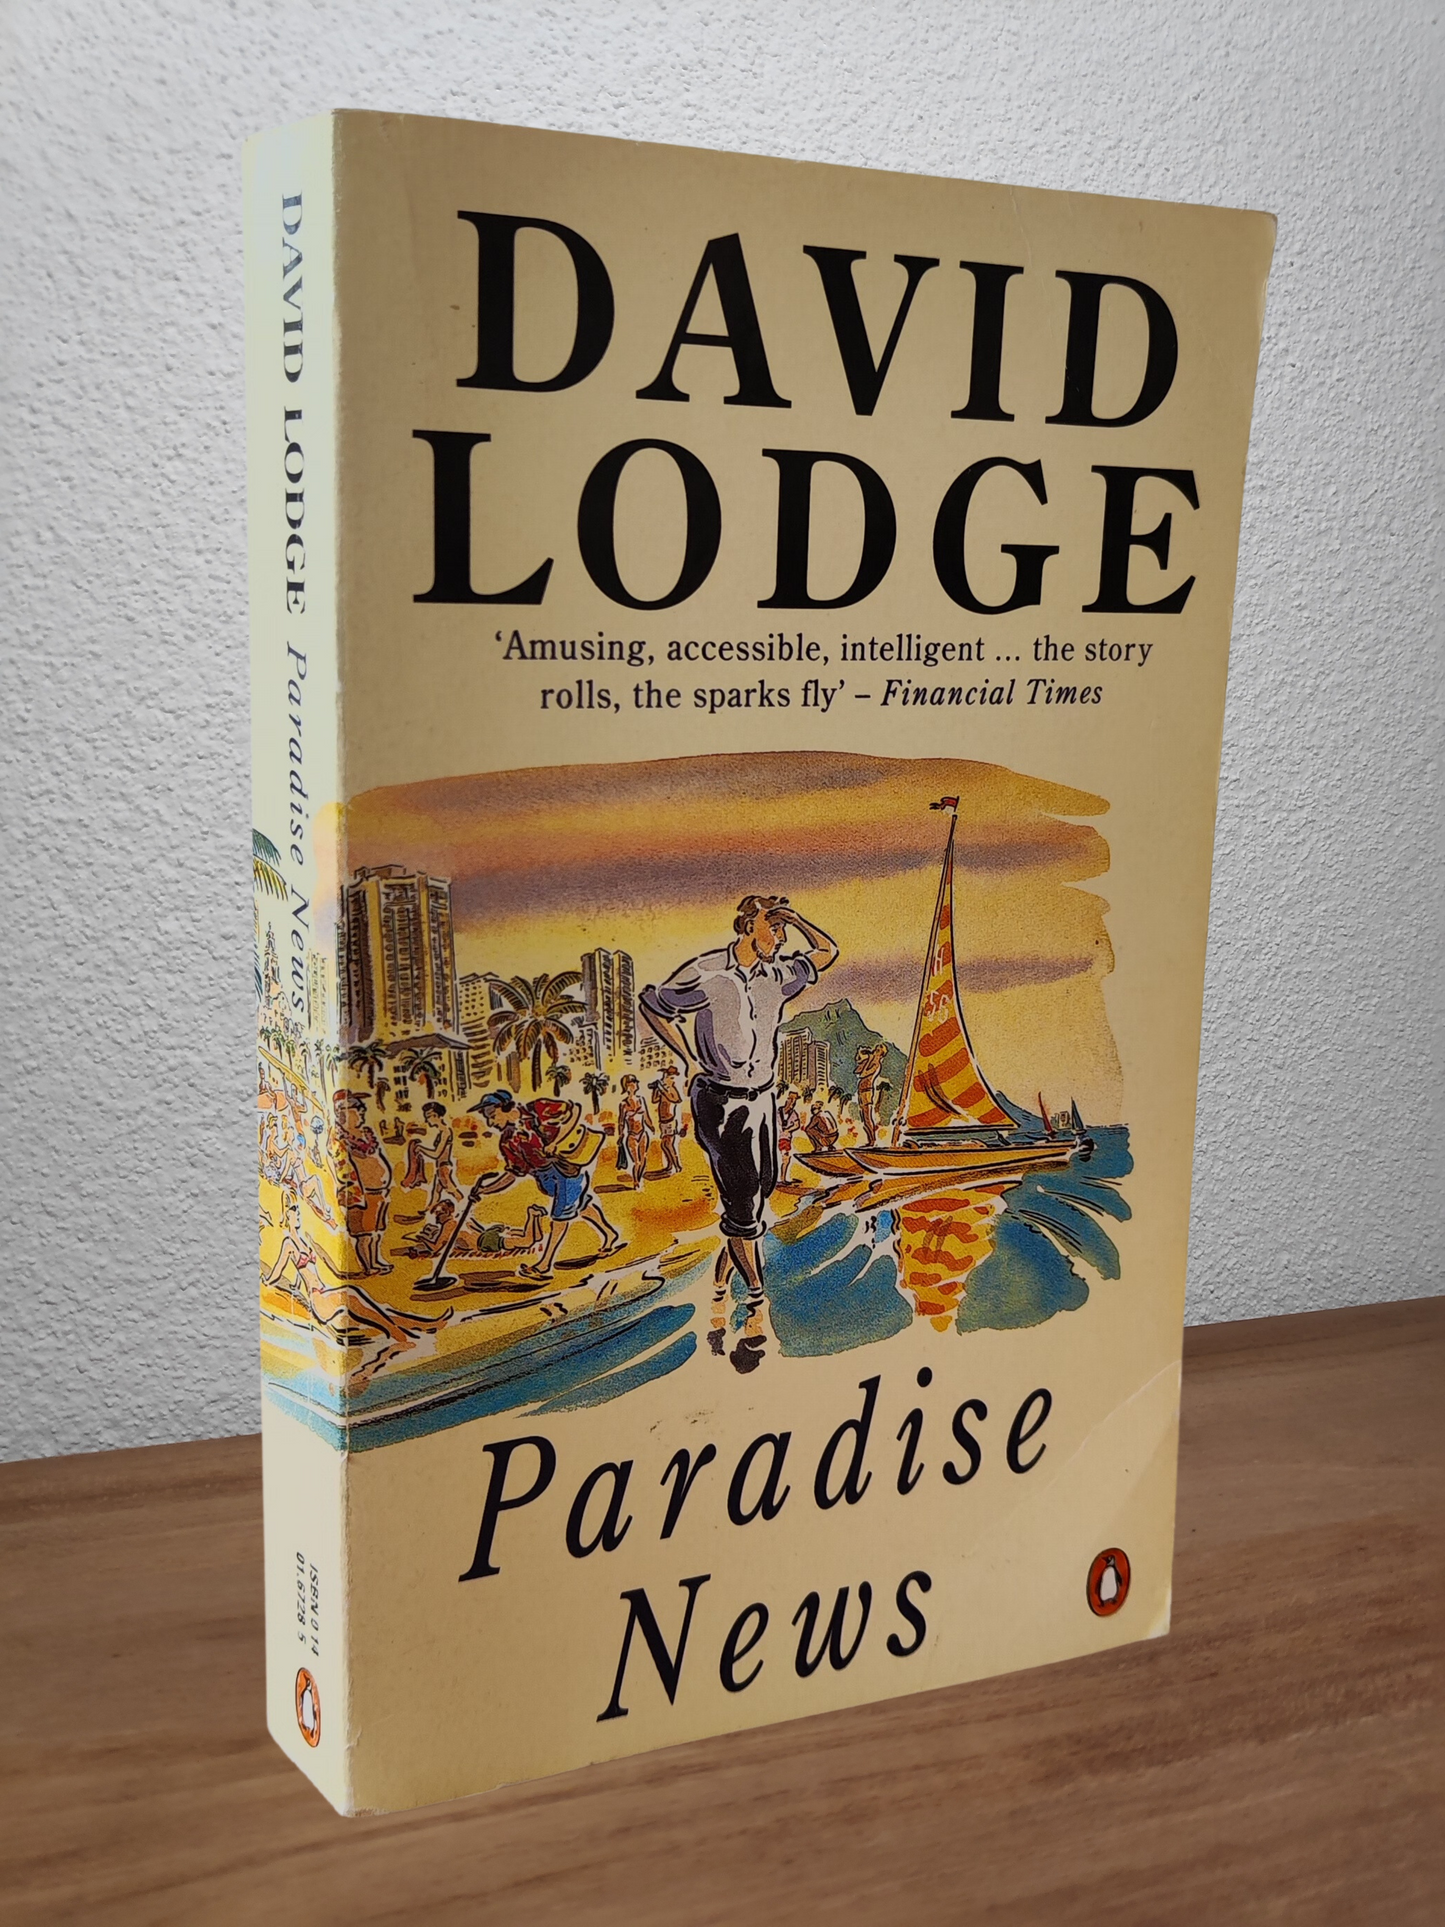 David Lodge - Paradise News